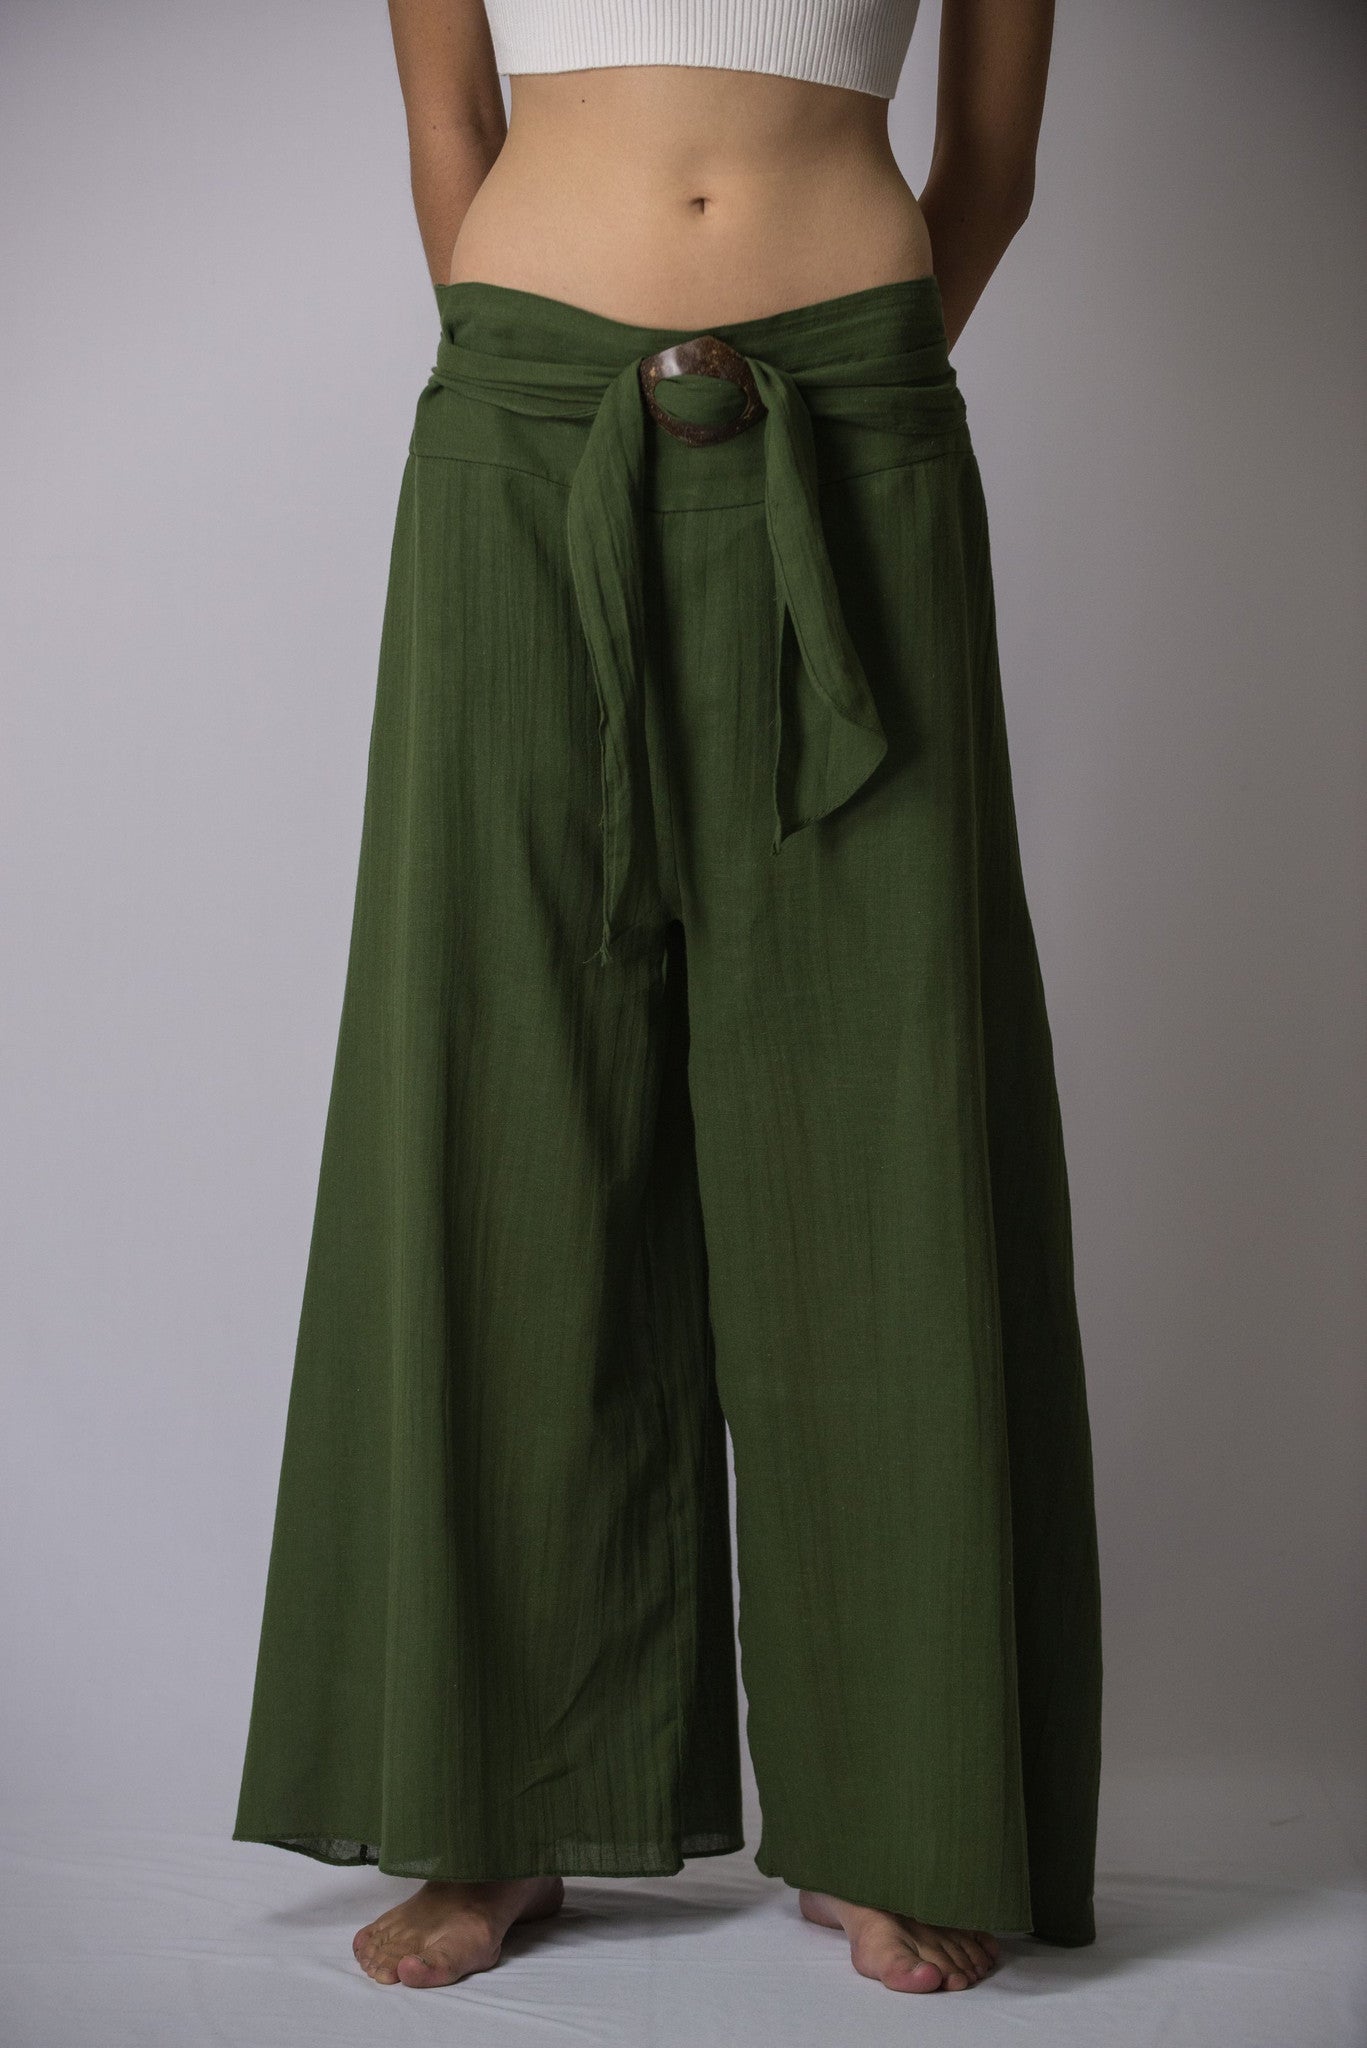 Women's Thai Harem Palazzo Pants in Solid Green – Harem Pants